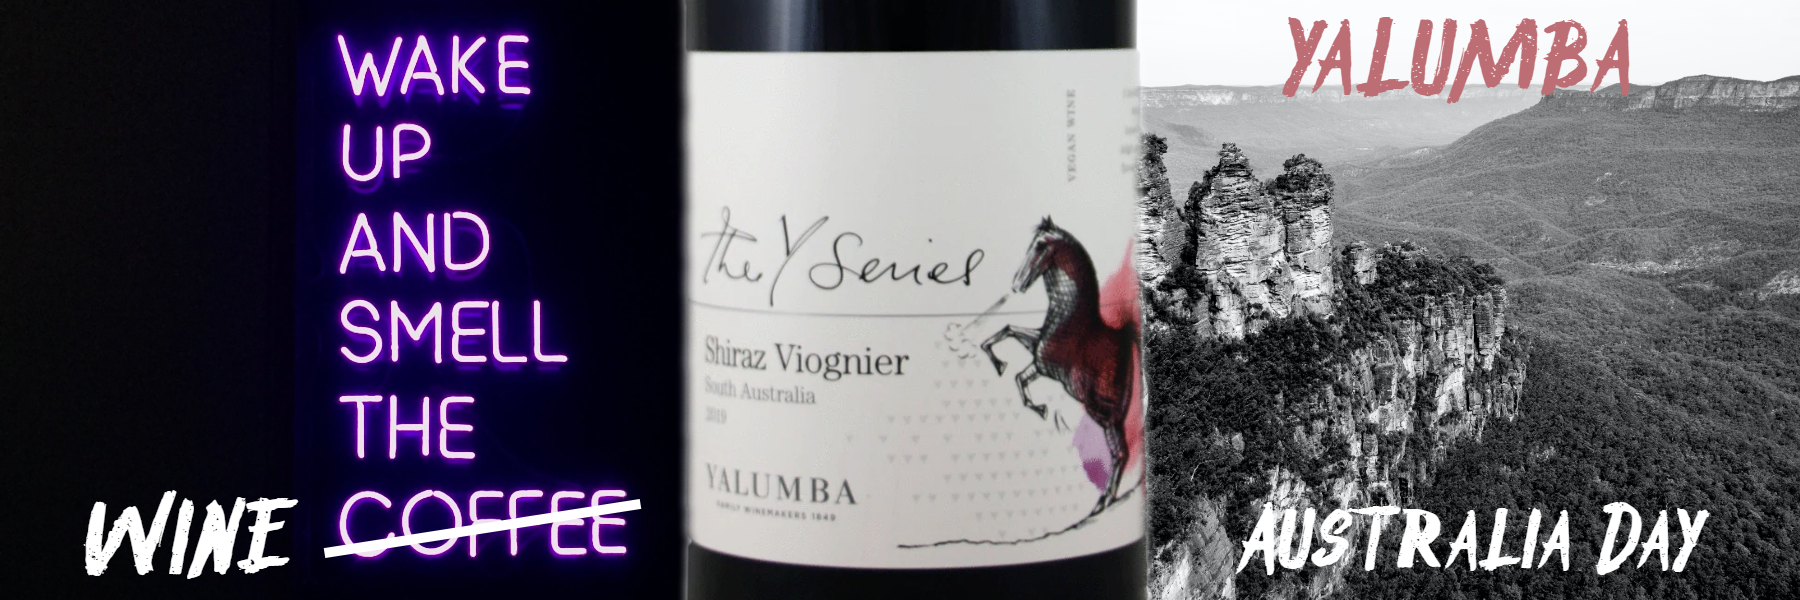 Yalumba "The Y Series" Shiraz Viognier , South Australia, 2019  £11.99/bottle